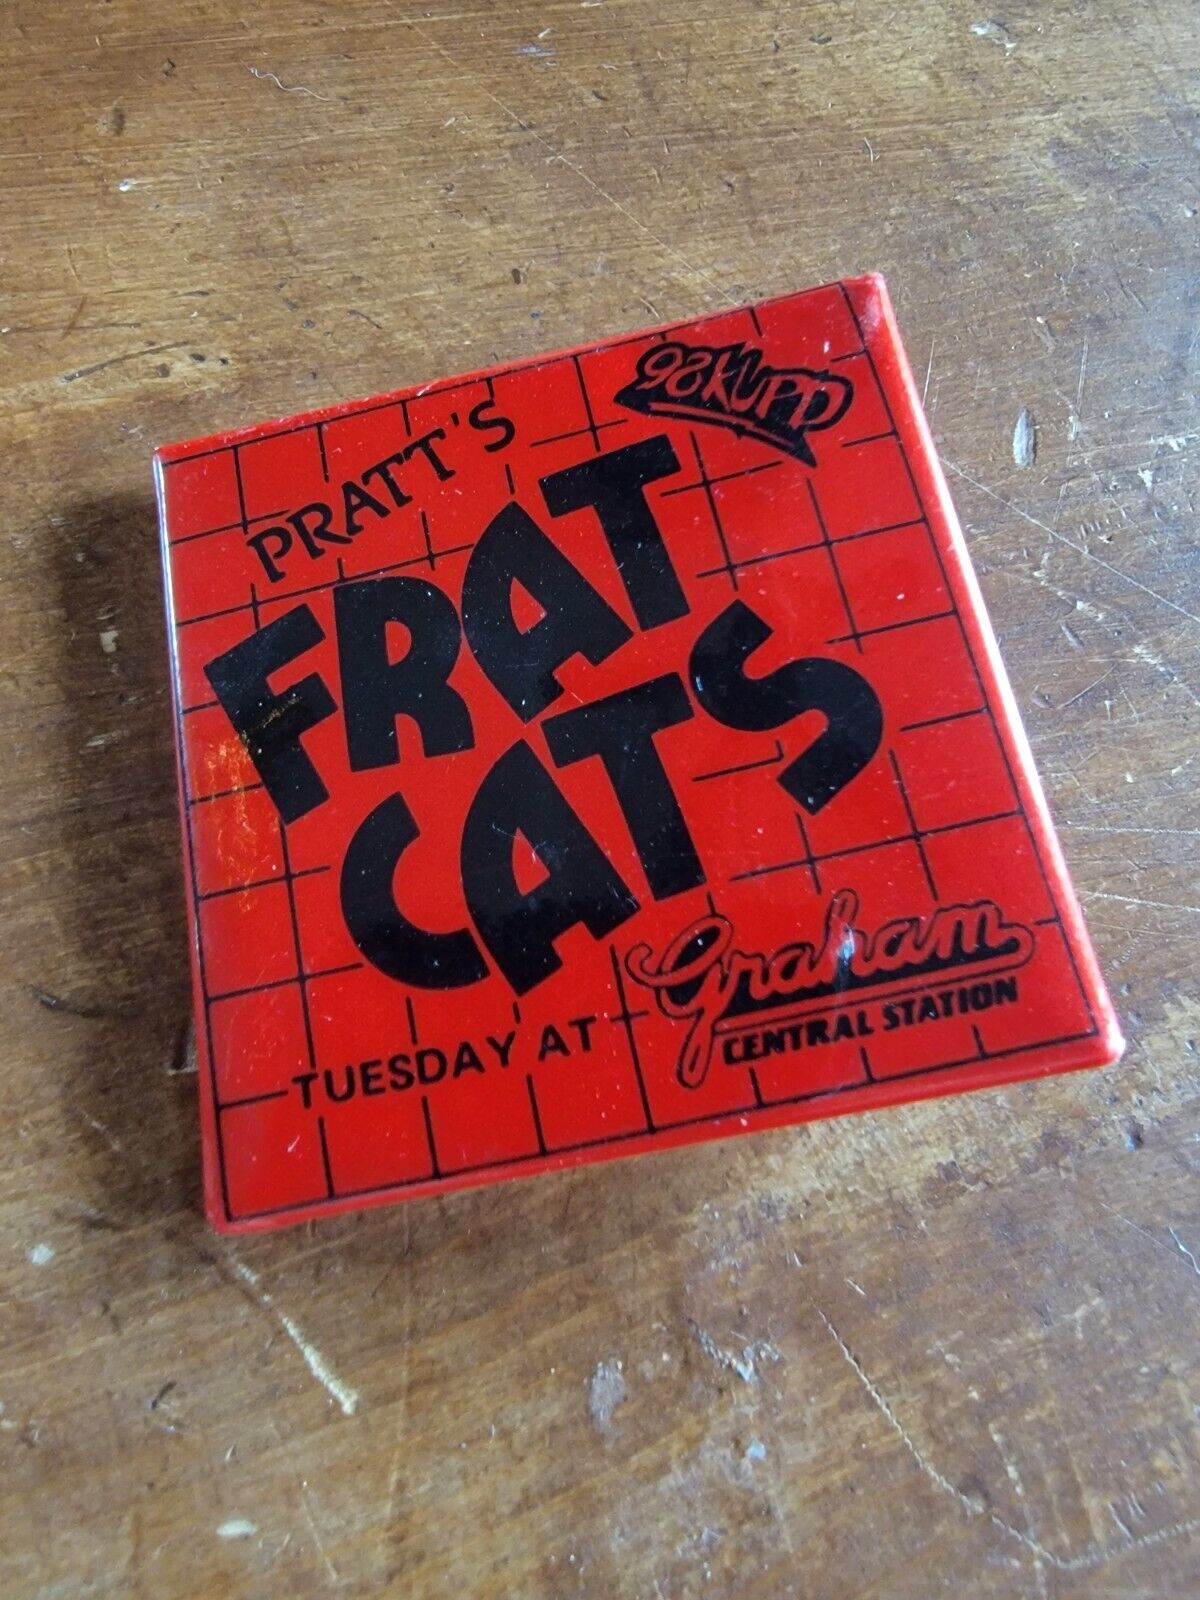 Pratt's Frat Cats 98KUPD Graham Central Station 1990's Promo Pinback